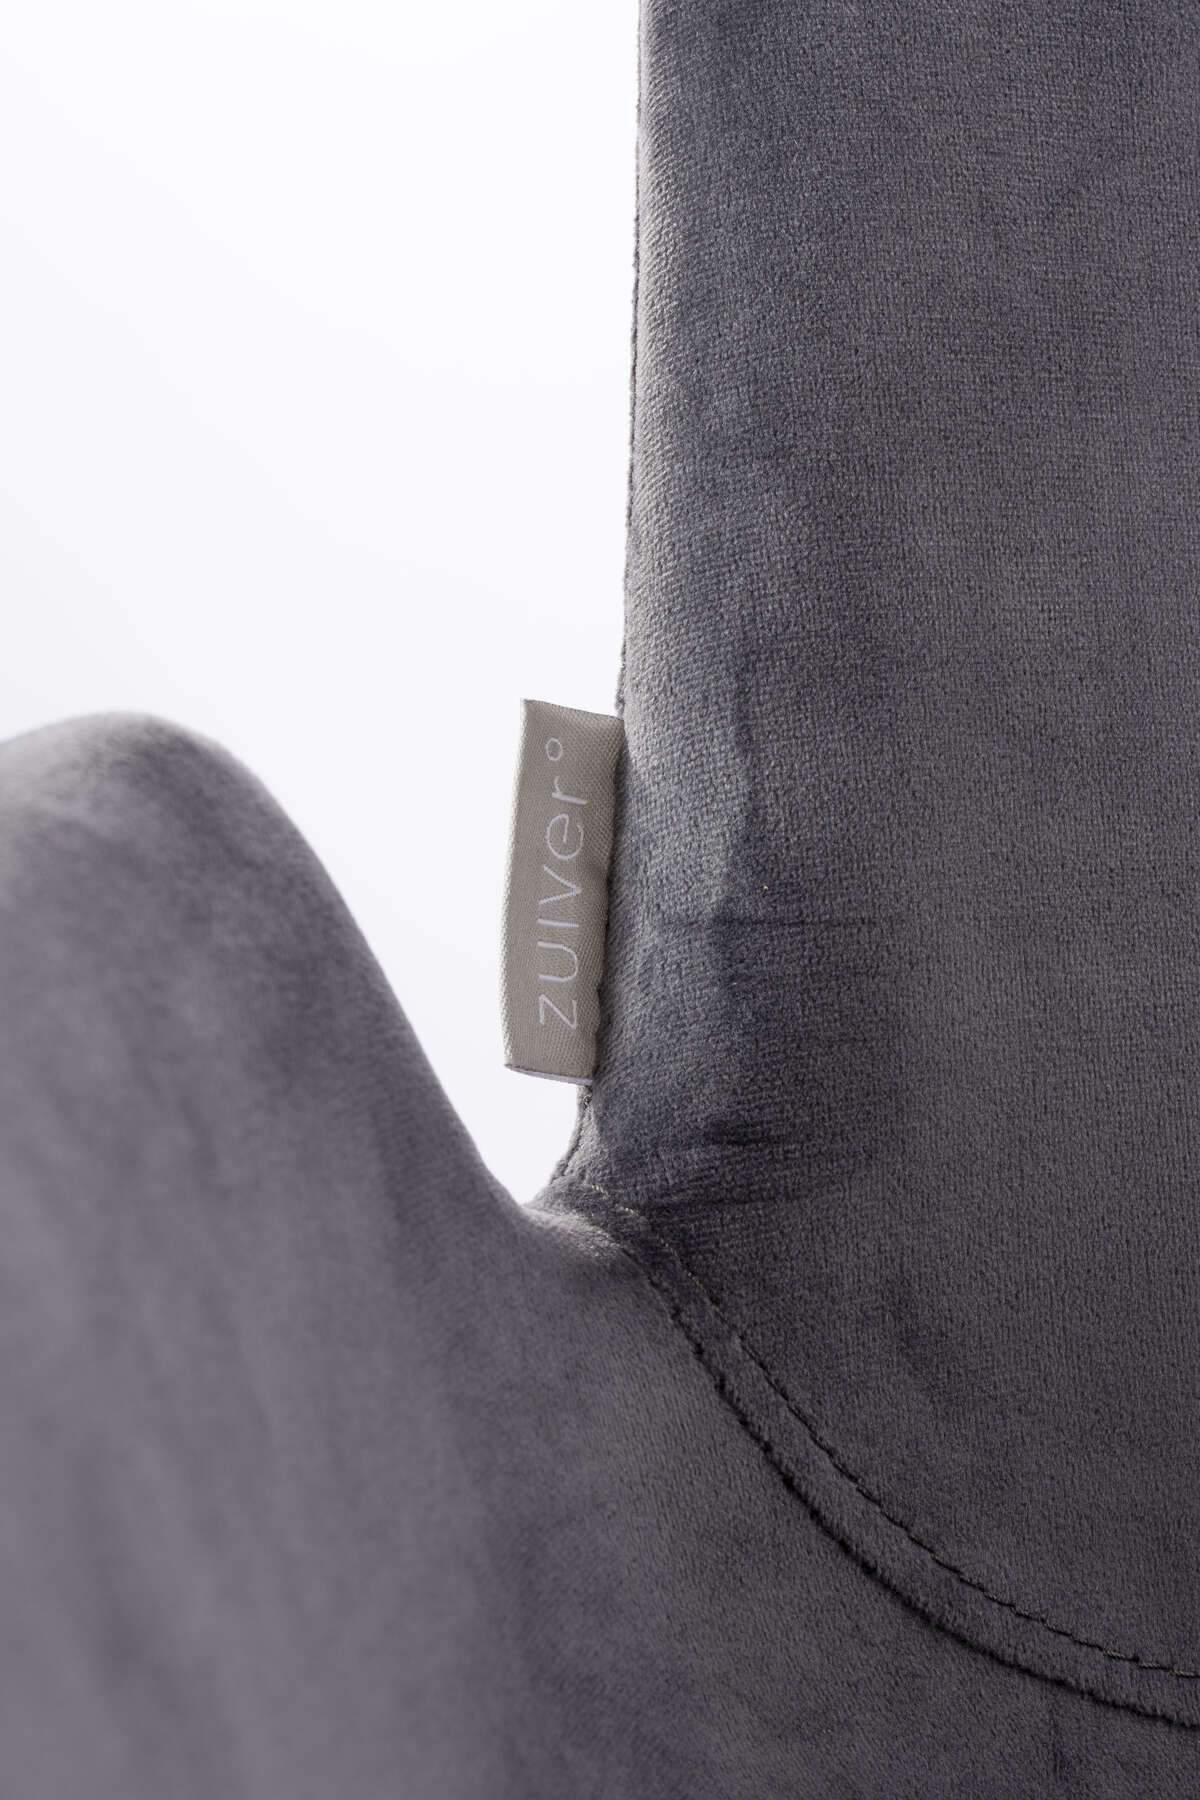 BRIT bar chair grey, Zuiver, Eye on Design